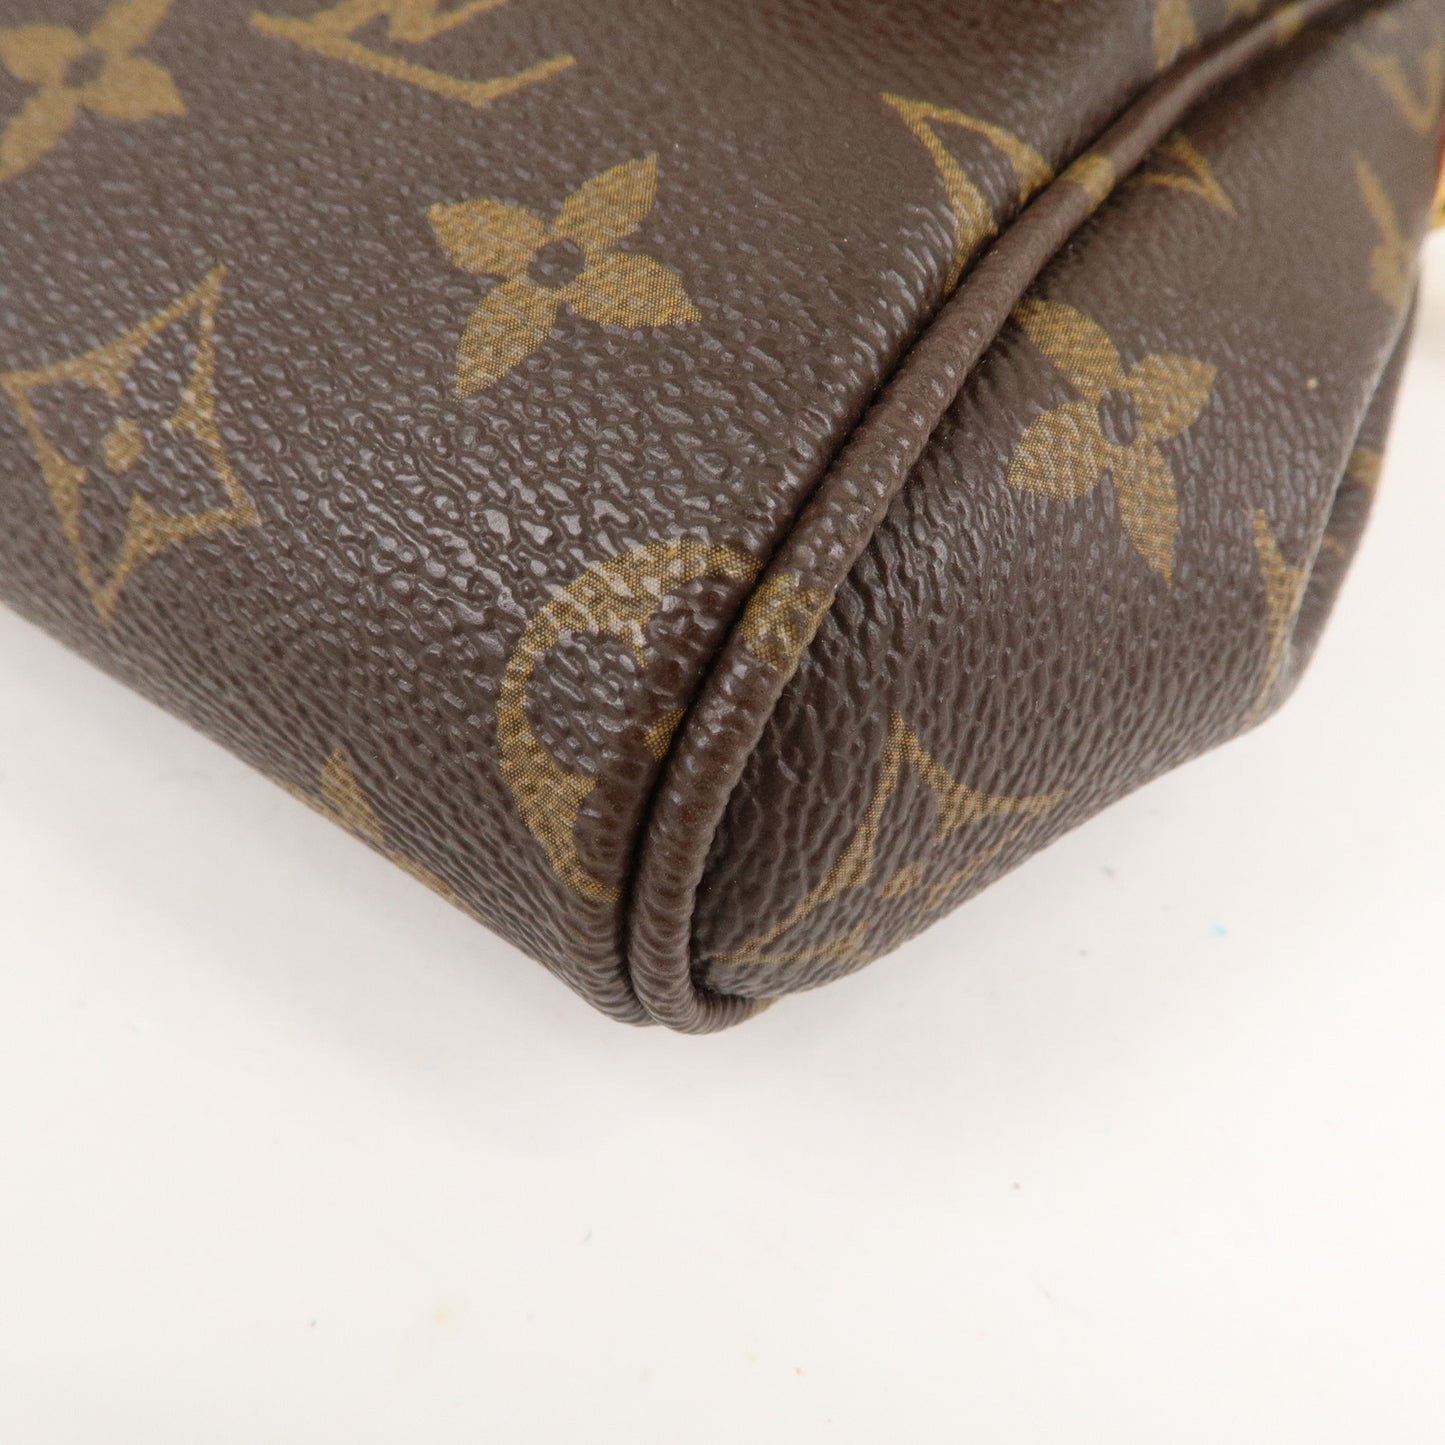 Louis Vuitton Monogram Favorite MM 2Way Shoulder Bag M40718